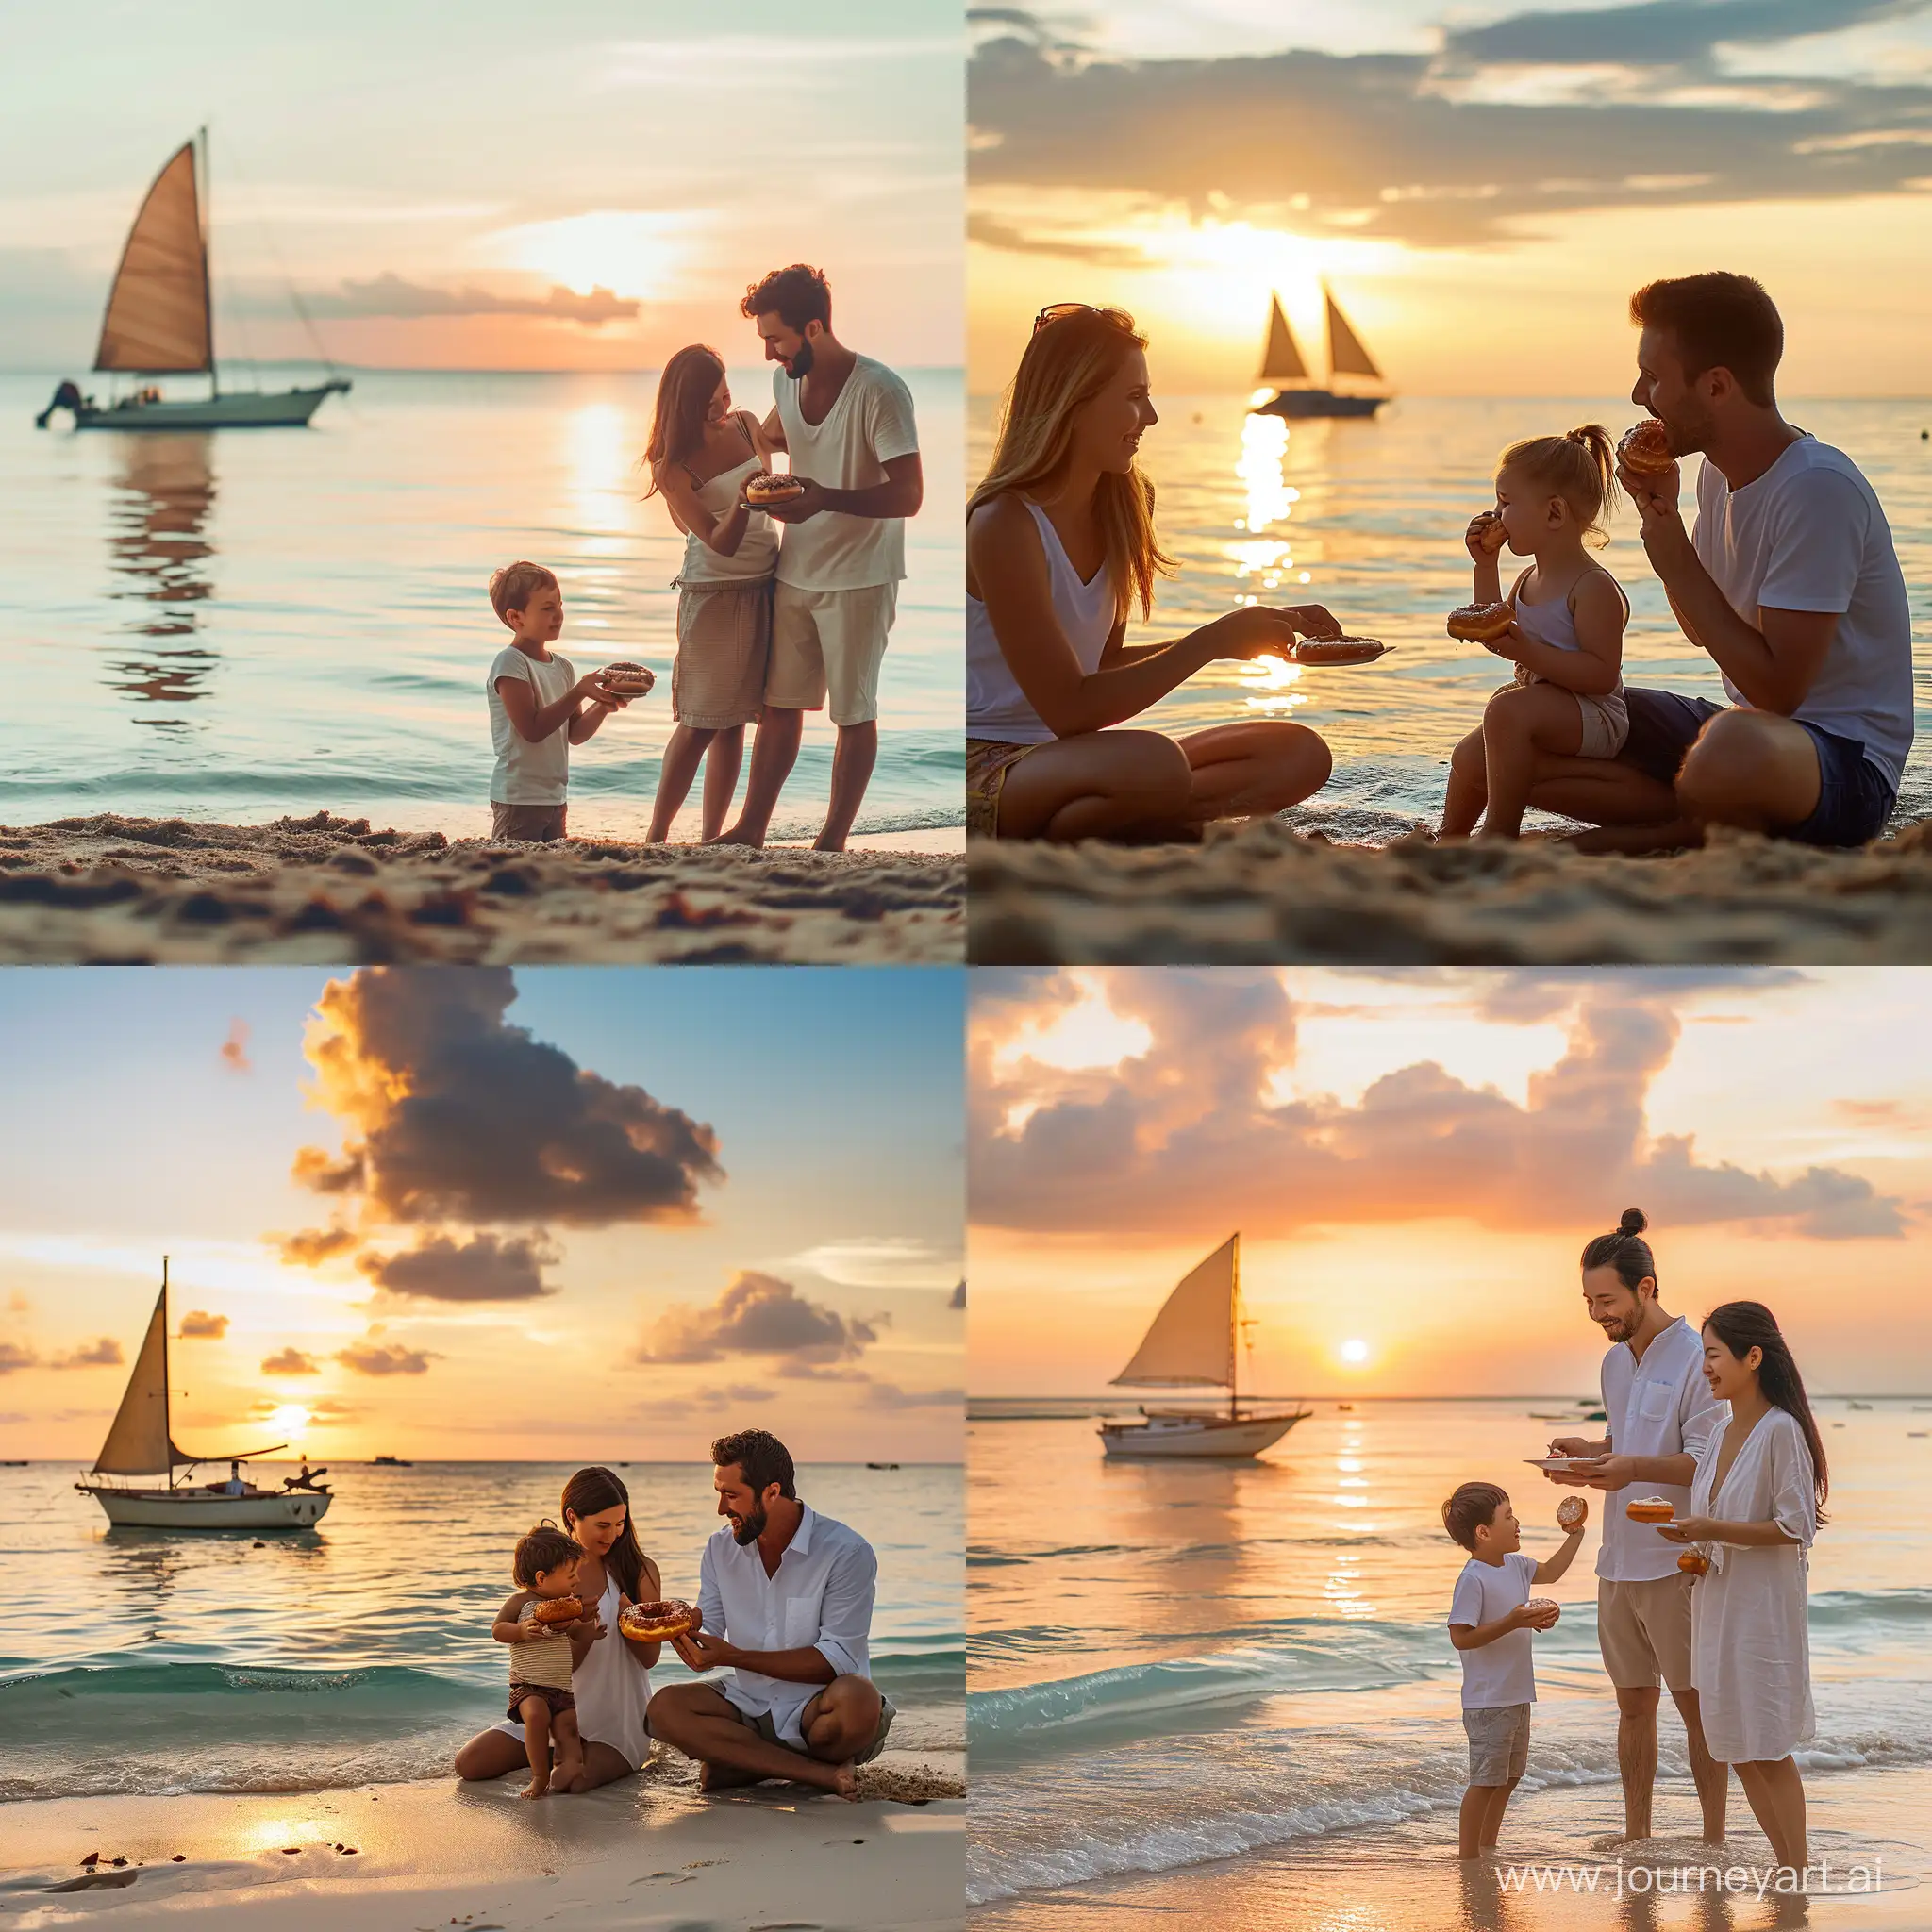 Joyful-Beach-Sunrise-Family-Enjoying-Donuts-by-the-Sea-in-HD-4K